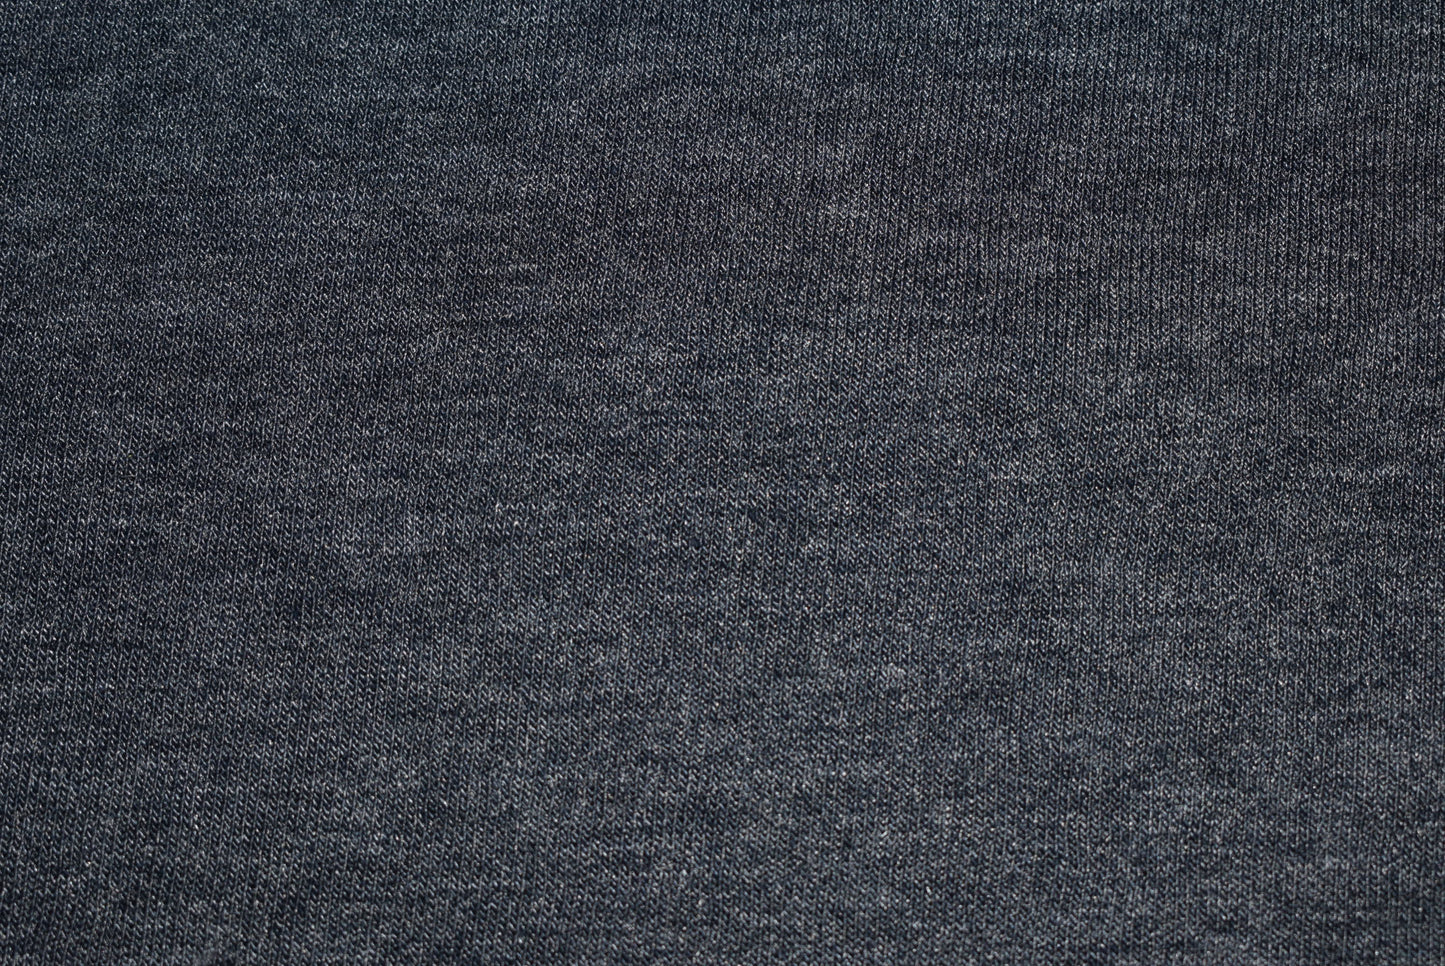 Blue/Grey sweatshirting